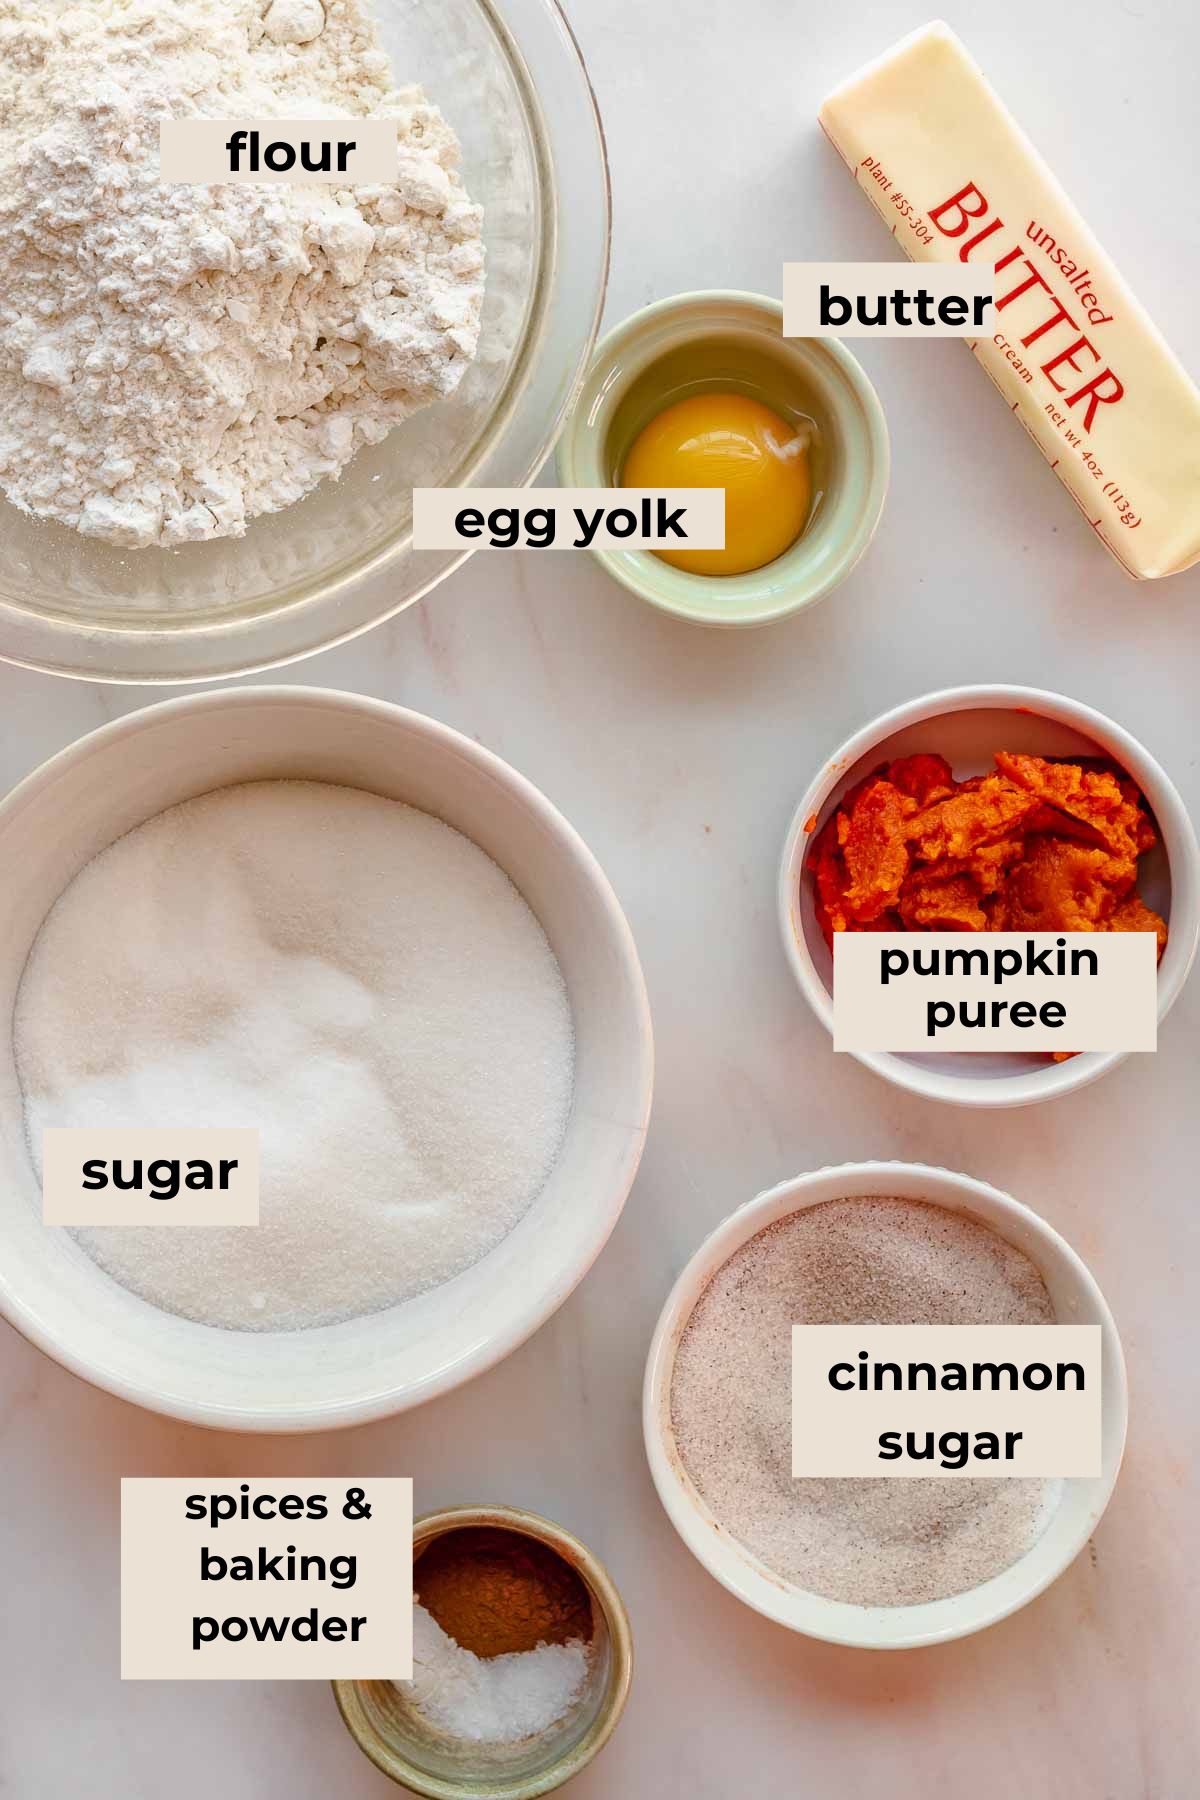 Ingredients just for the pumpkin cookies.